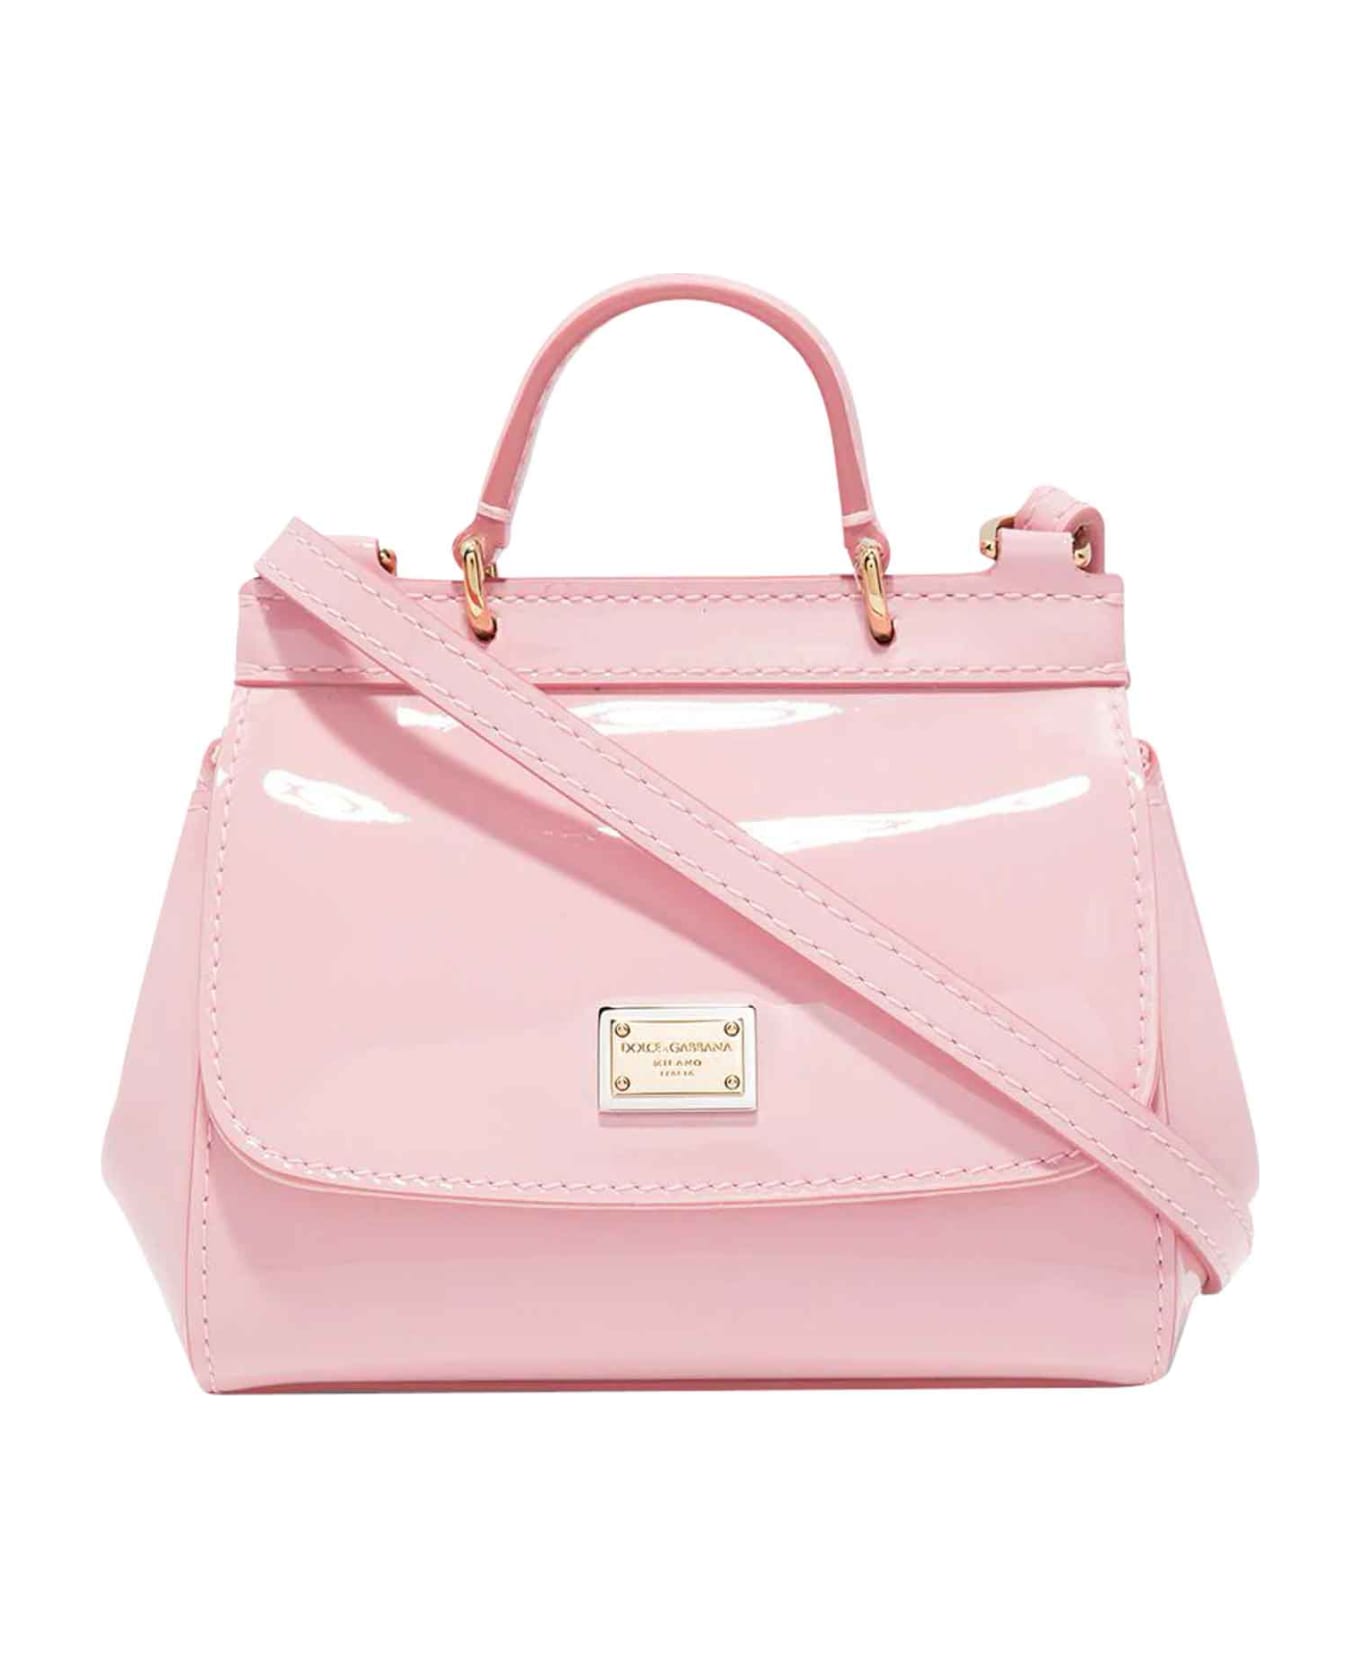 Dolce & Gabbana Pink Tote Bag - Rosa